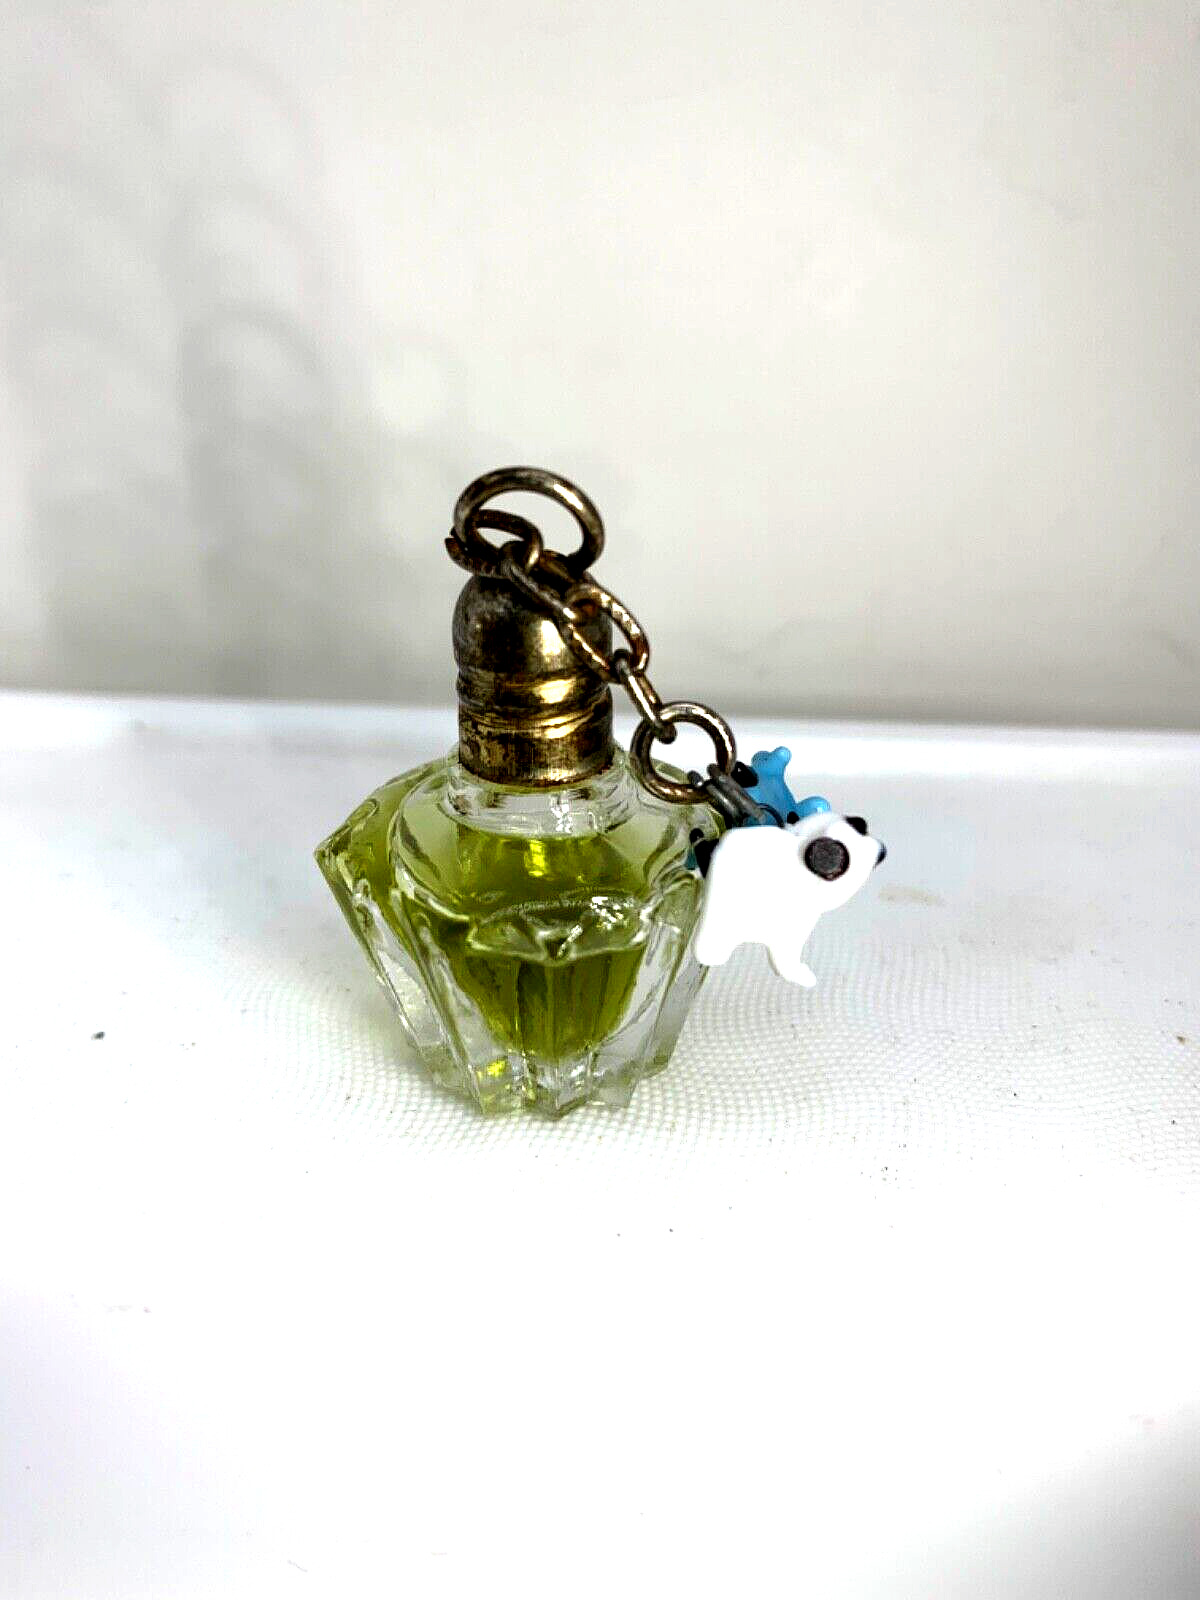 Darling  VTG Irice mini perfume bottle w/tiny glass dangling Dog charms.  1930s